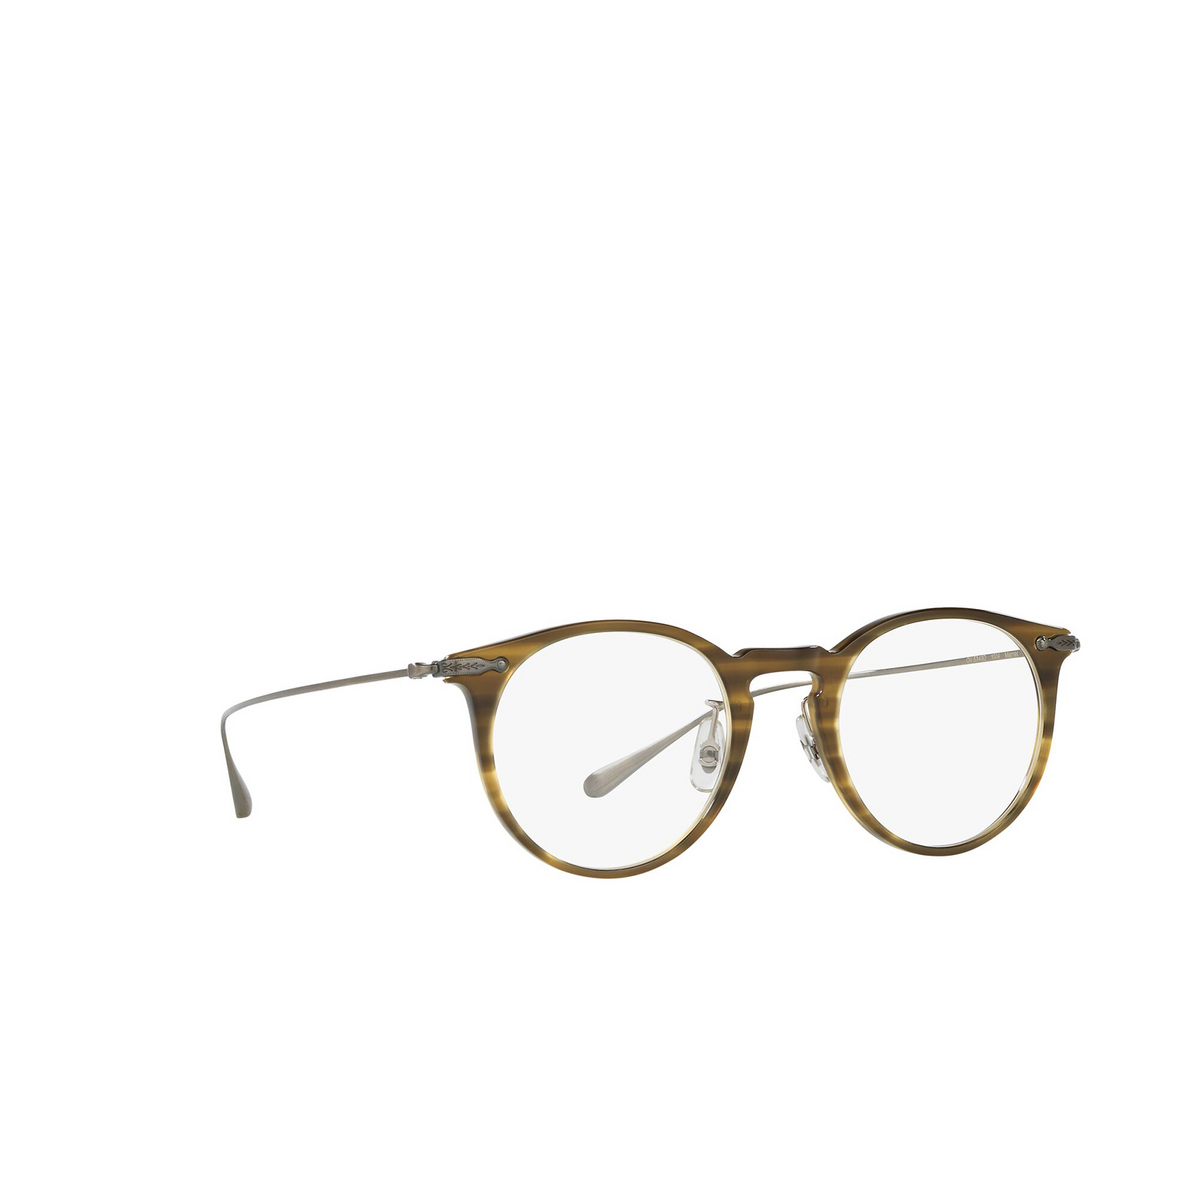 Oliver Peoples® Round Eyeglasses: Marret OV5343D color Olive Gradient 1004 - three-quarters view.